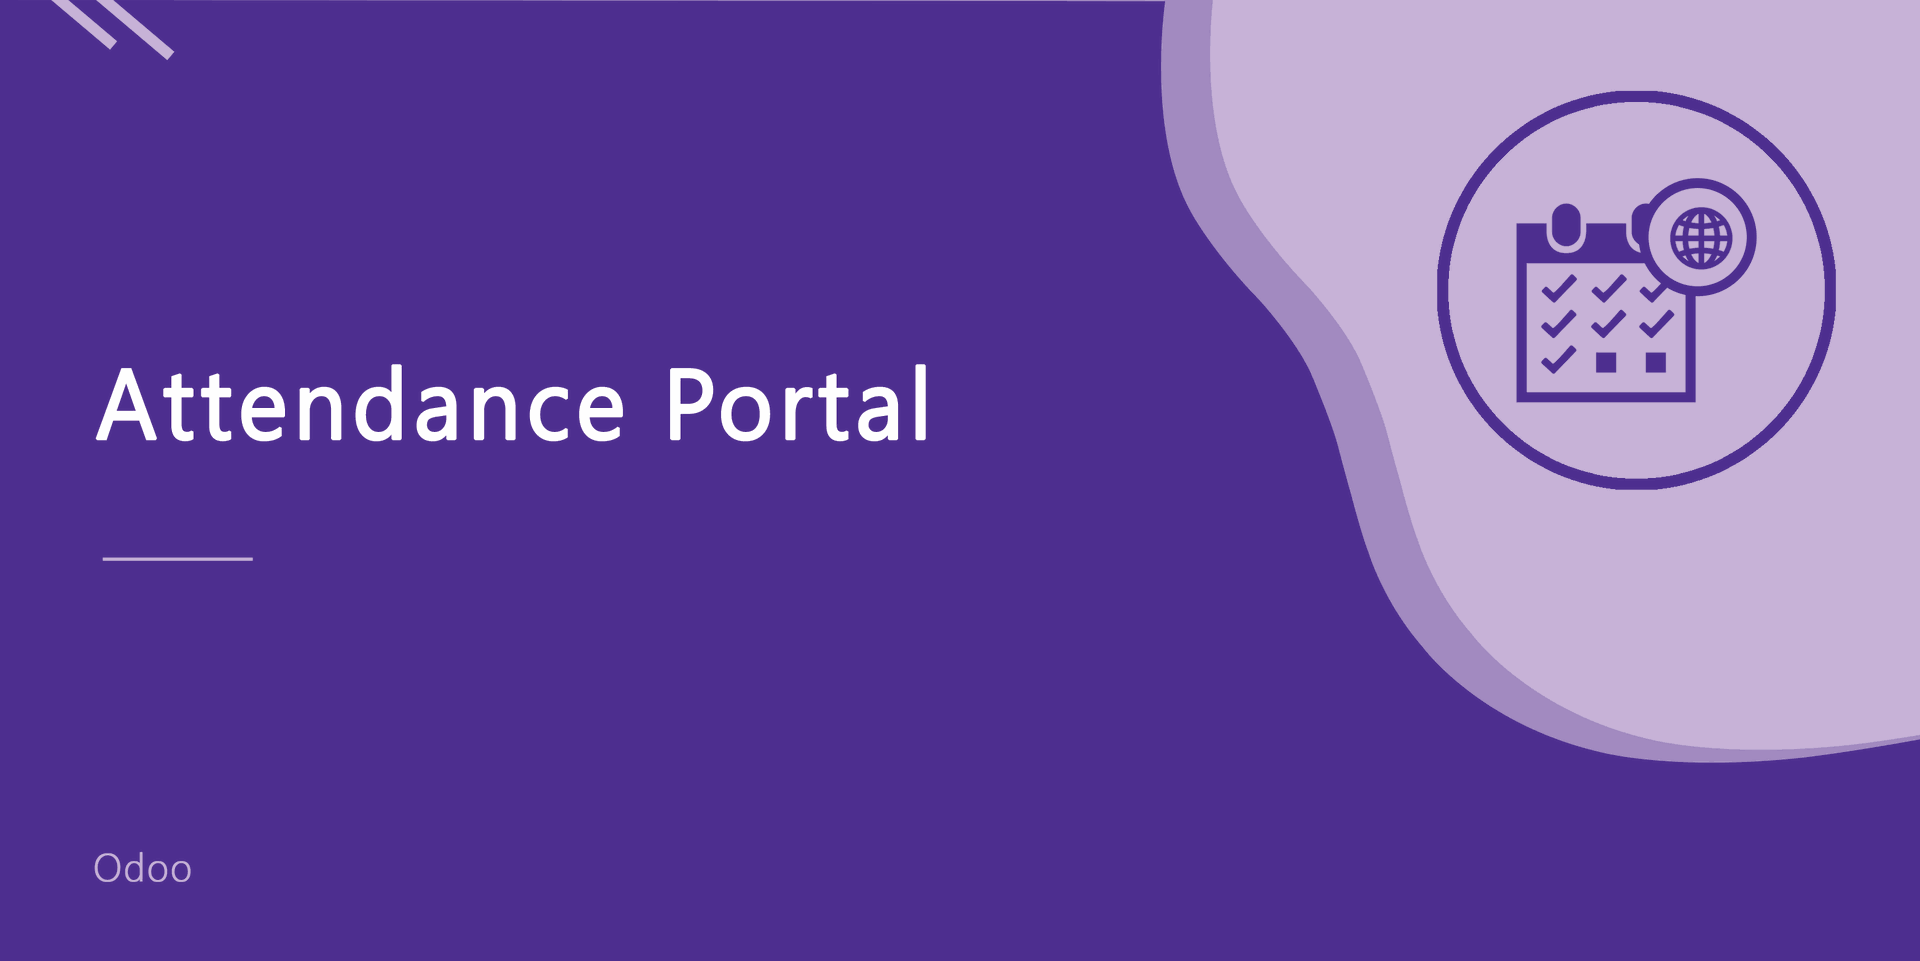 Attendance Portal
